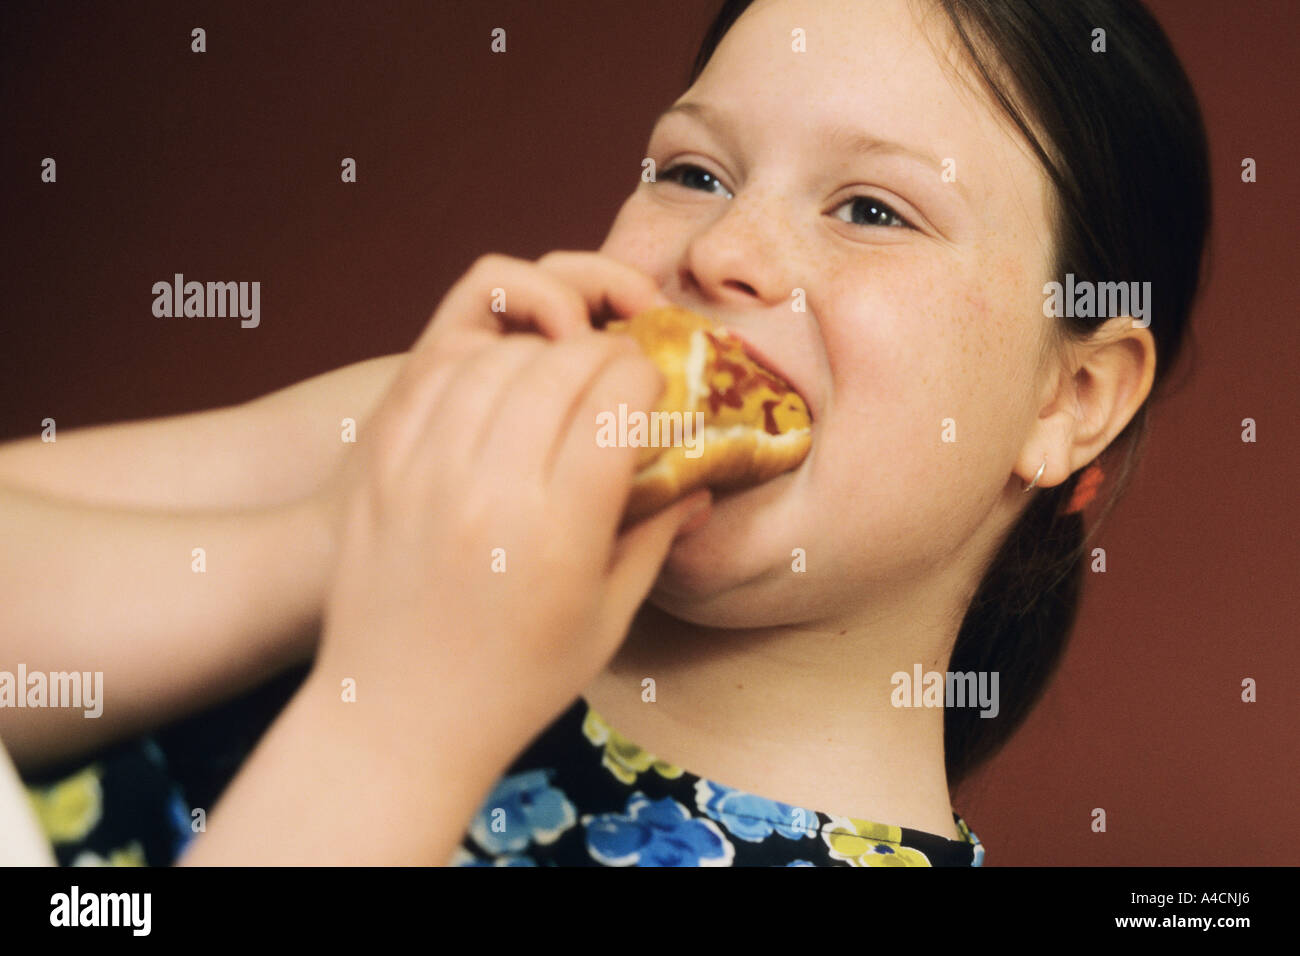 11 year old girl eating a hotdog Stock Photo